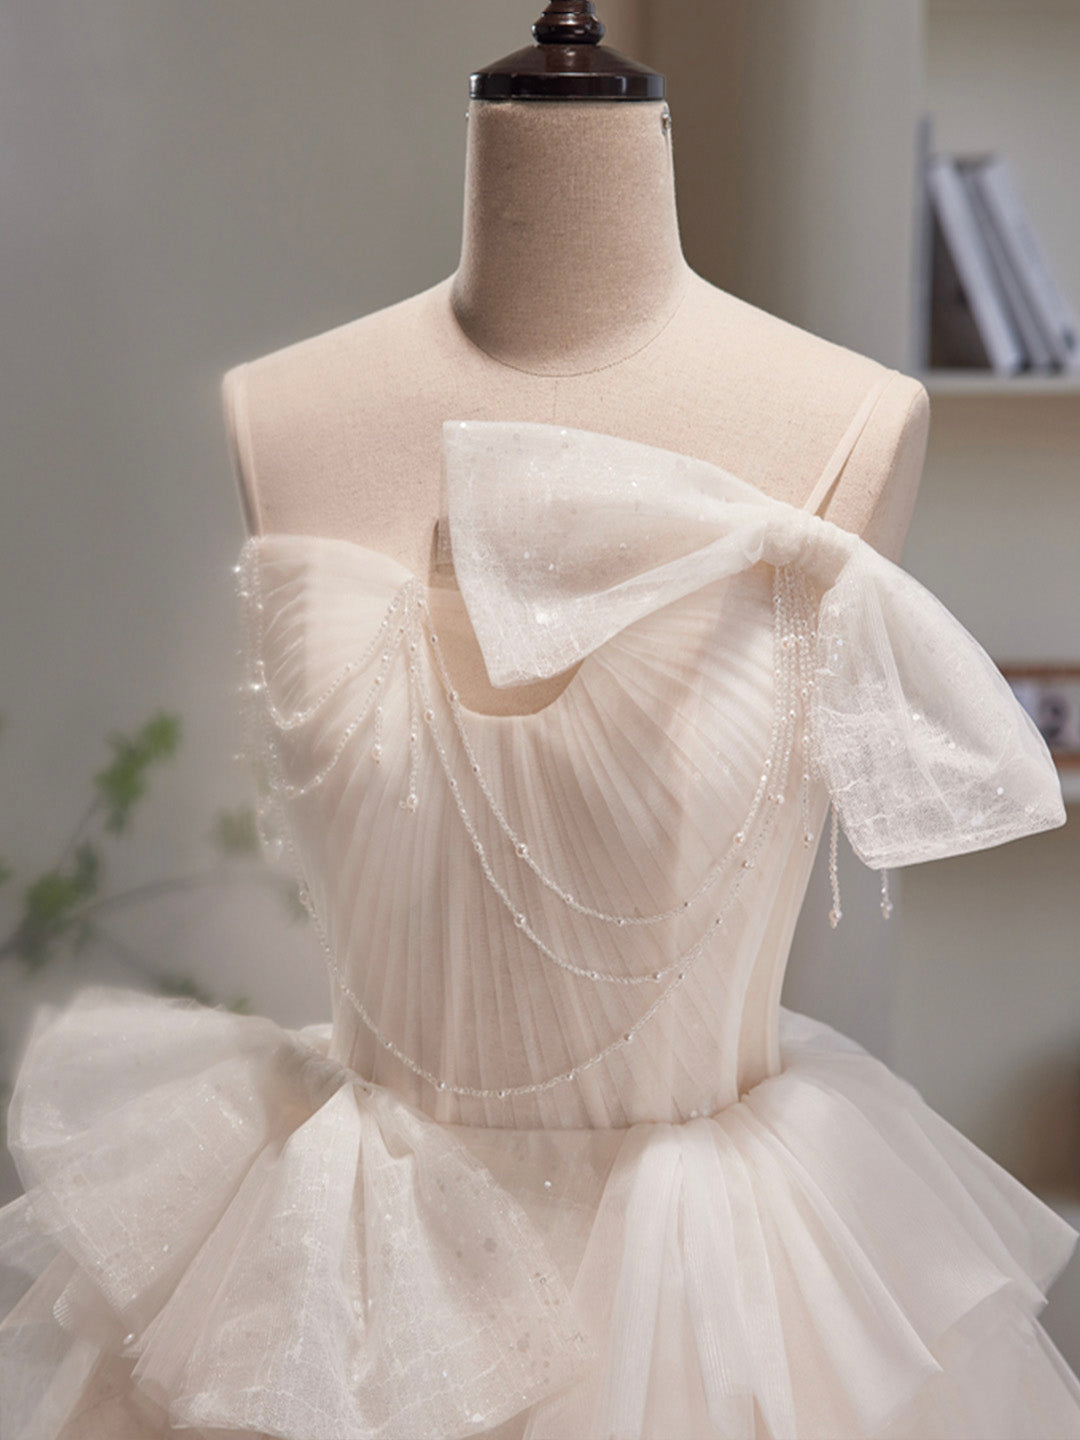 Bridesmaid Dresses Velvet, Champagne Spaghetti Strap Tulle Short Prom Dress, Cute A-Line Homecoming Dress